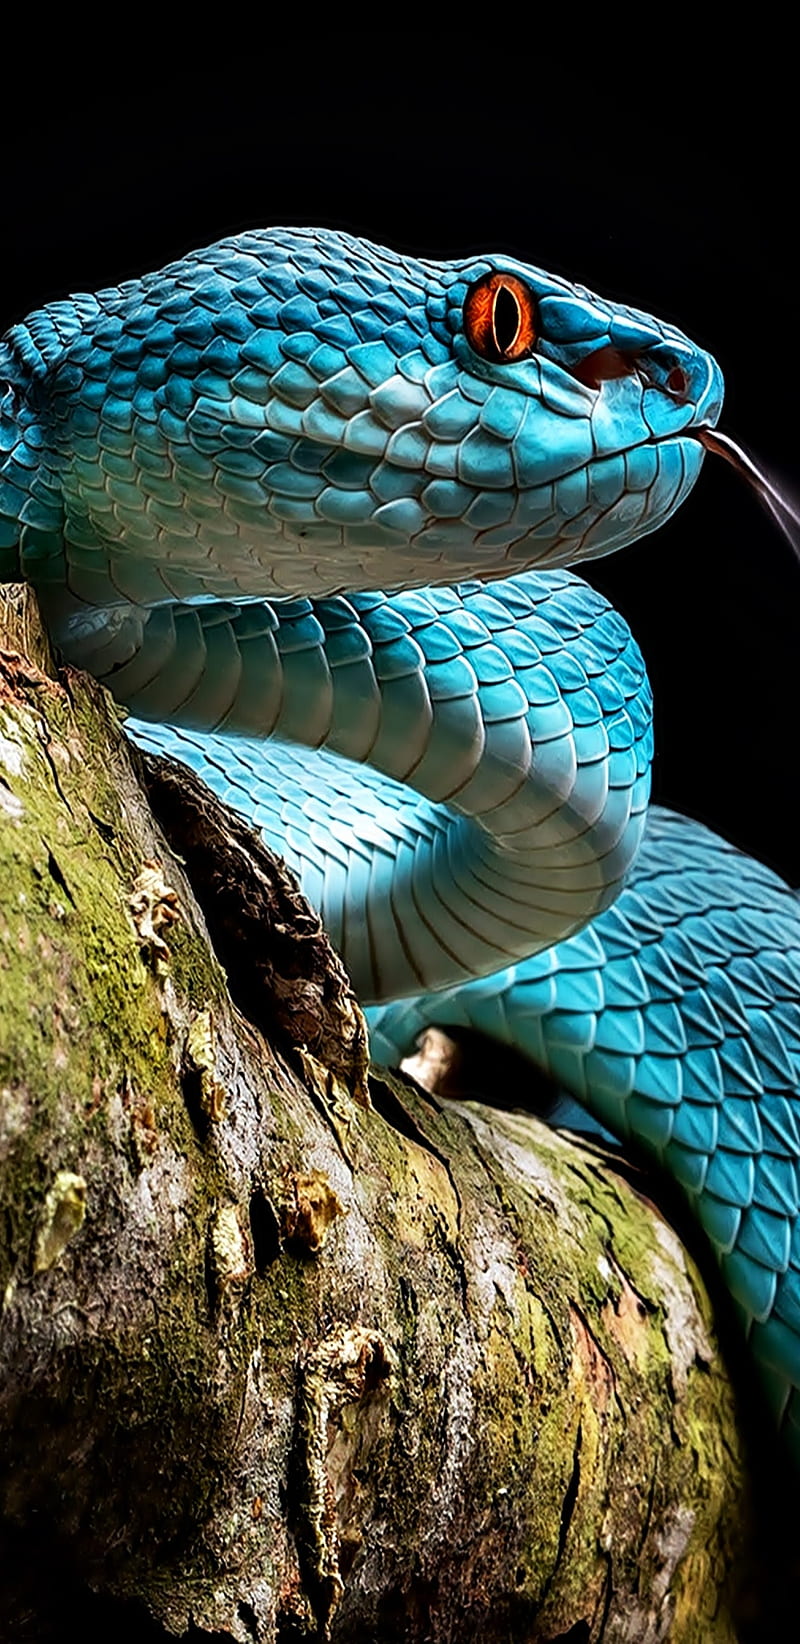 Viper Snake Wallpaper Download  MOONAZ